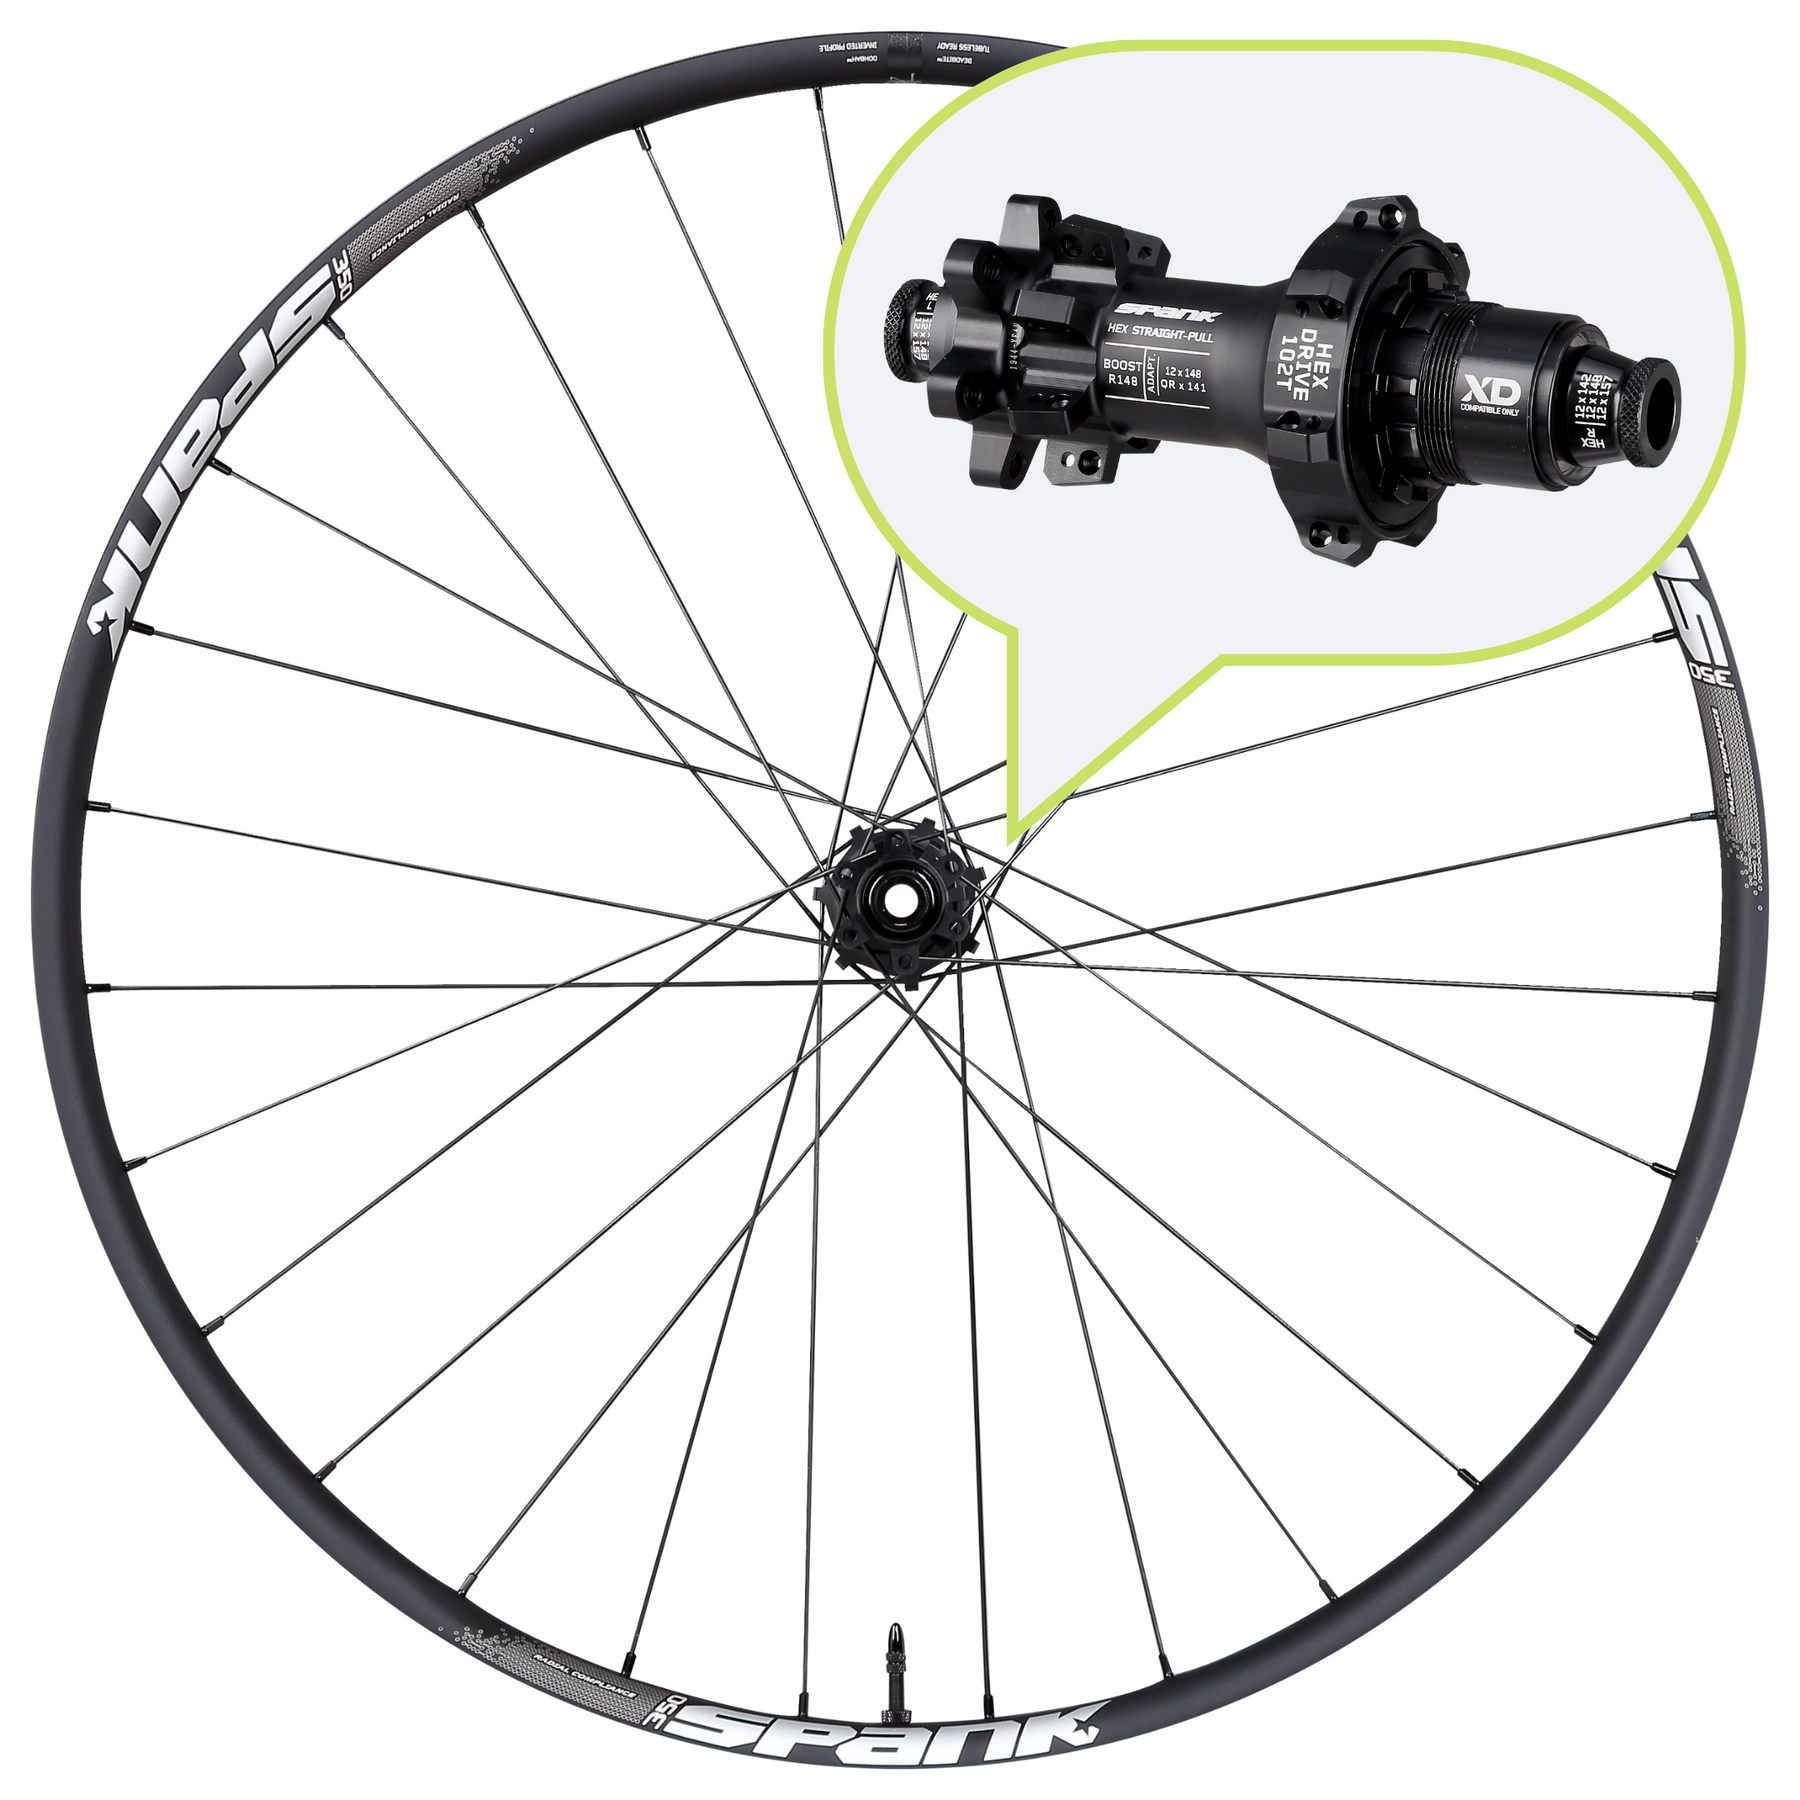 SPANK 350 Vibrocore Rear Wheel │ Pro EWS Choice │ The Gravity Cartel